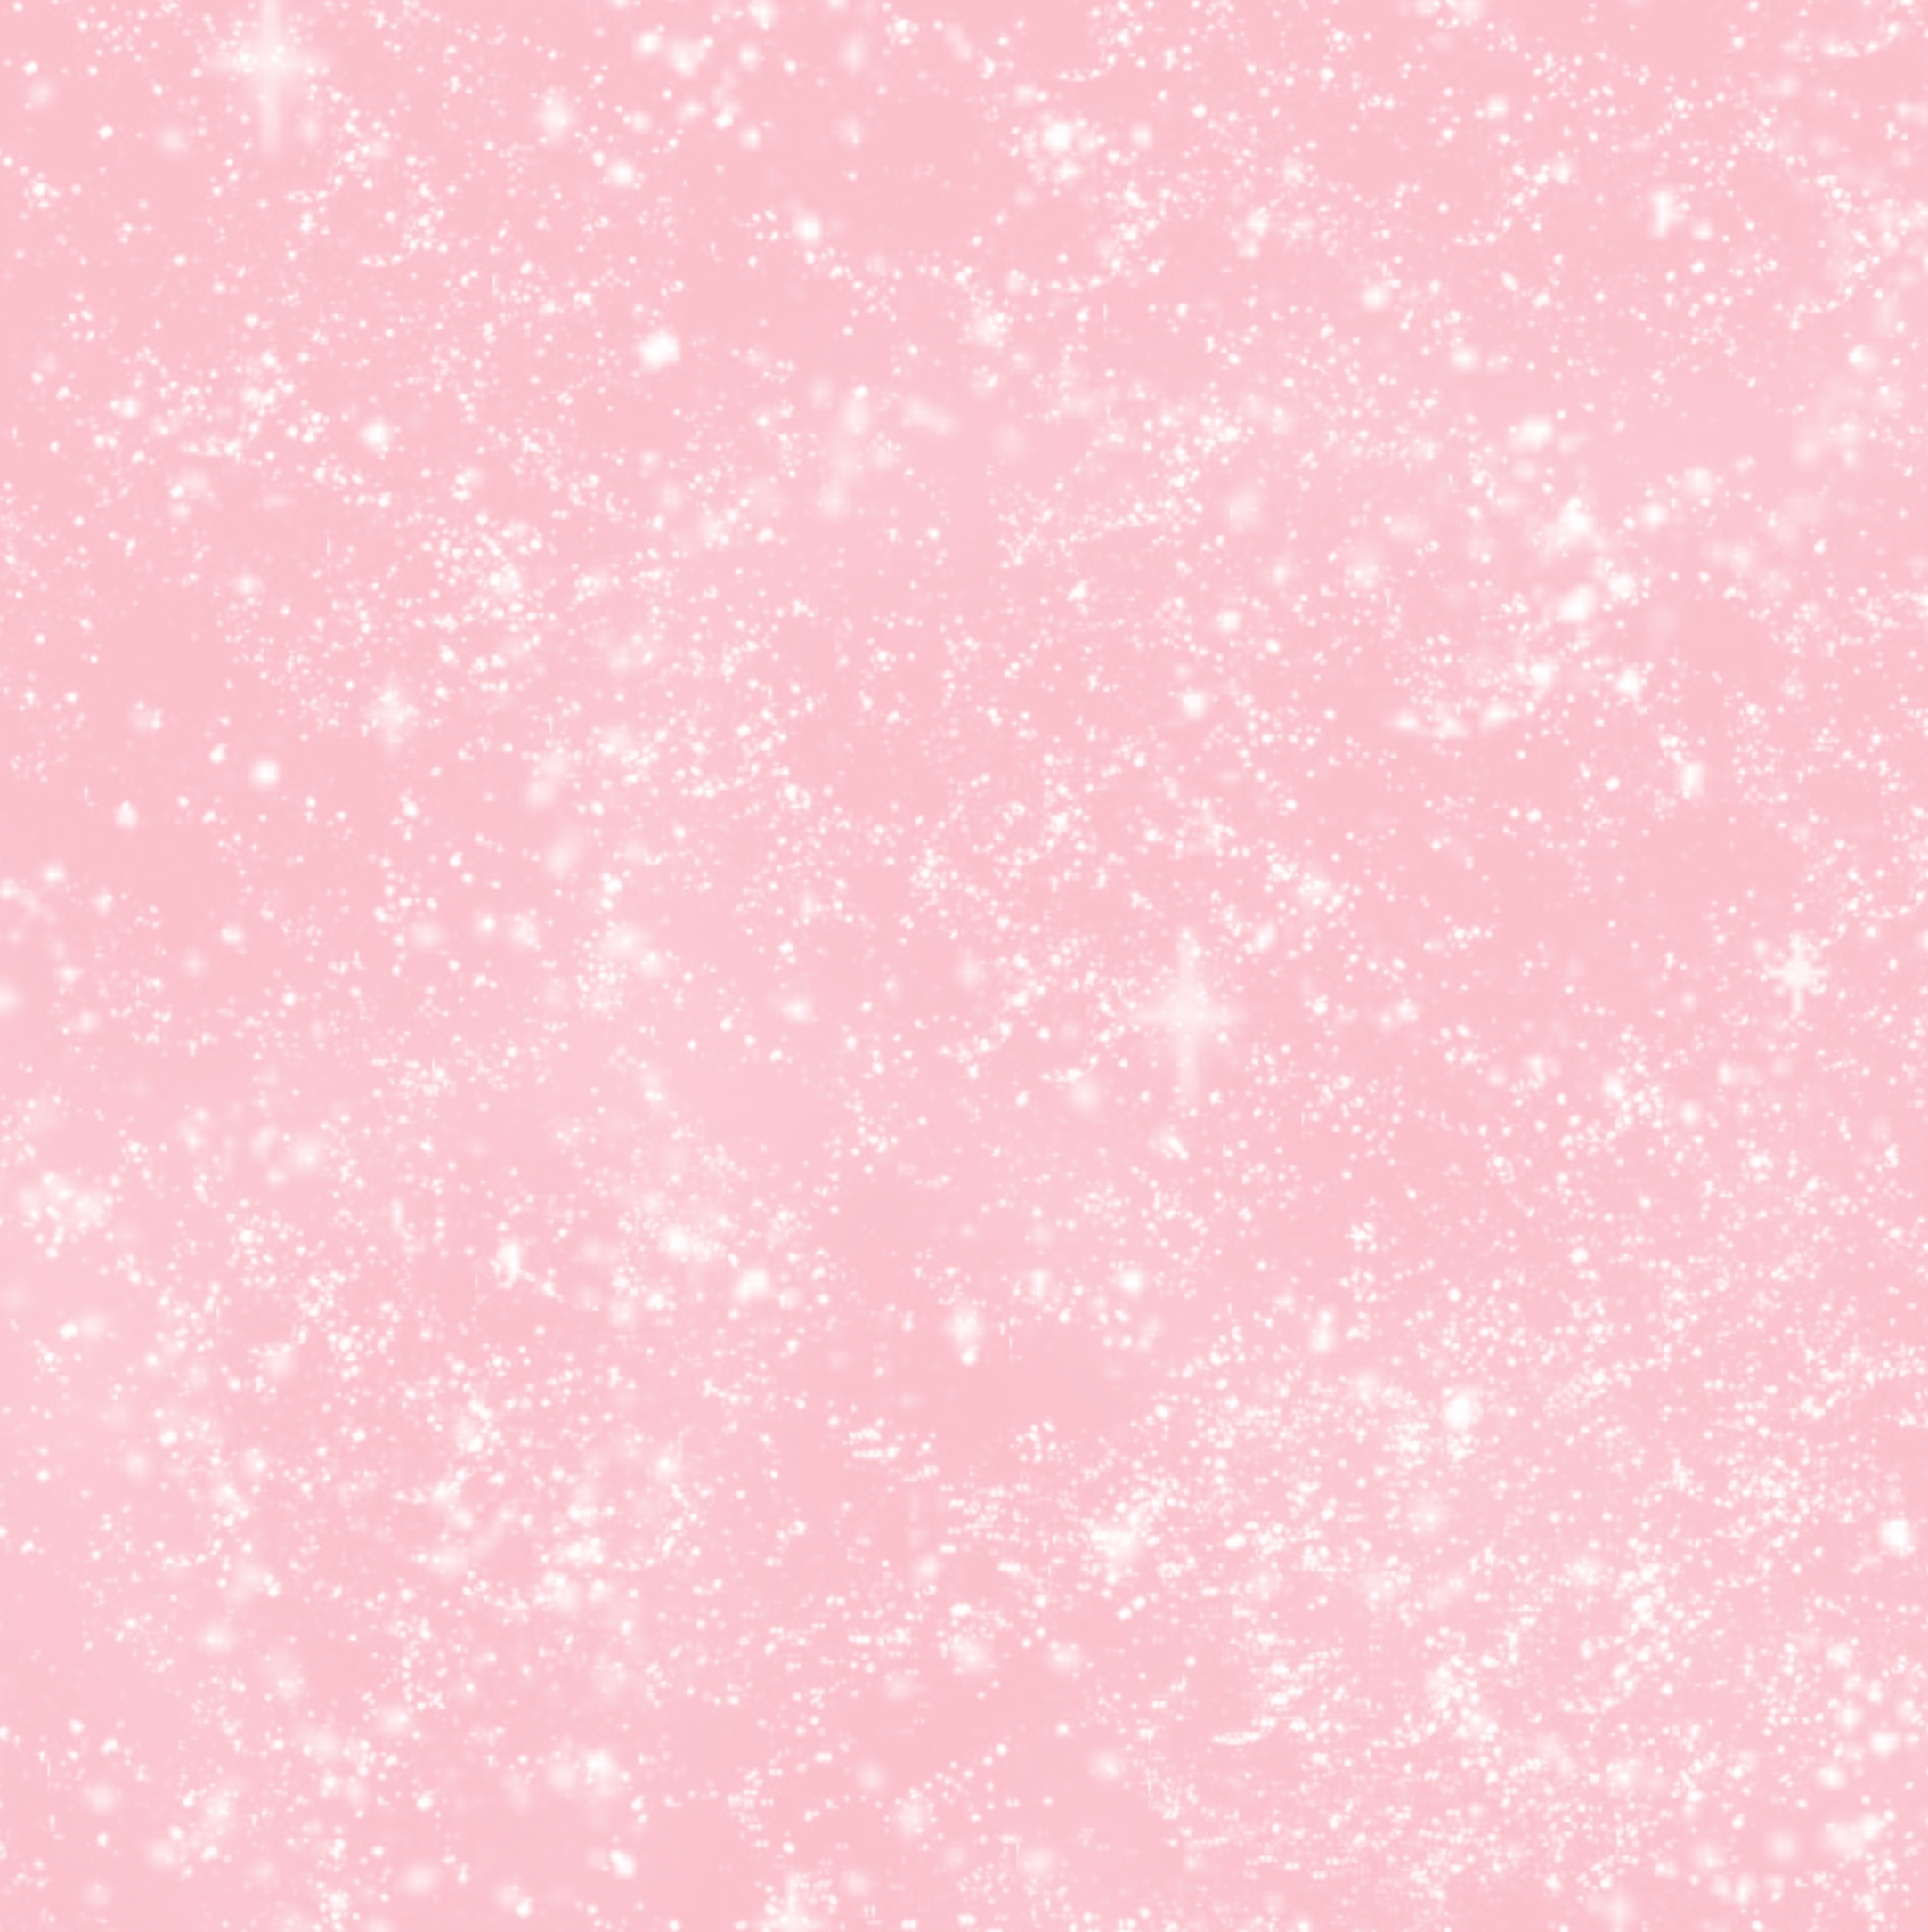 Light Pink Sparkles by